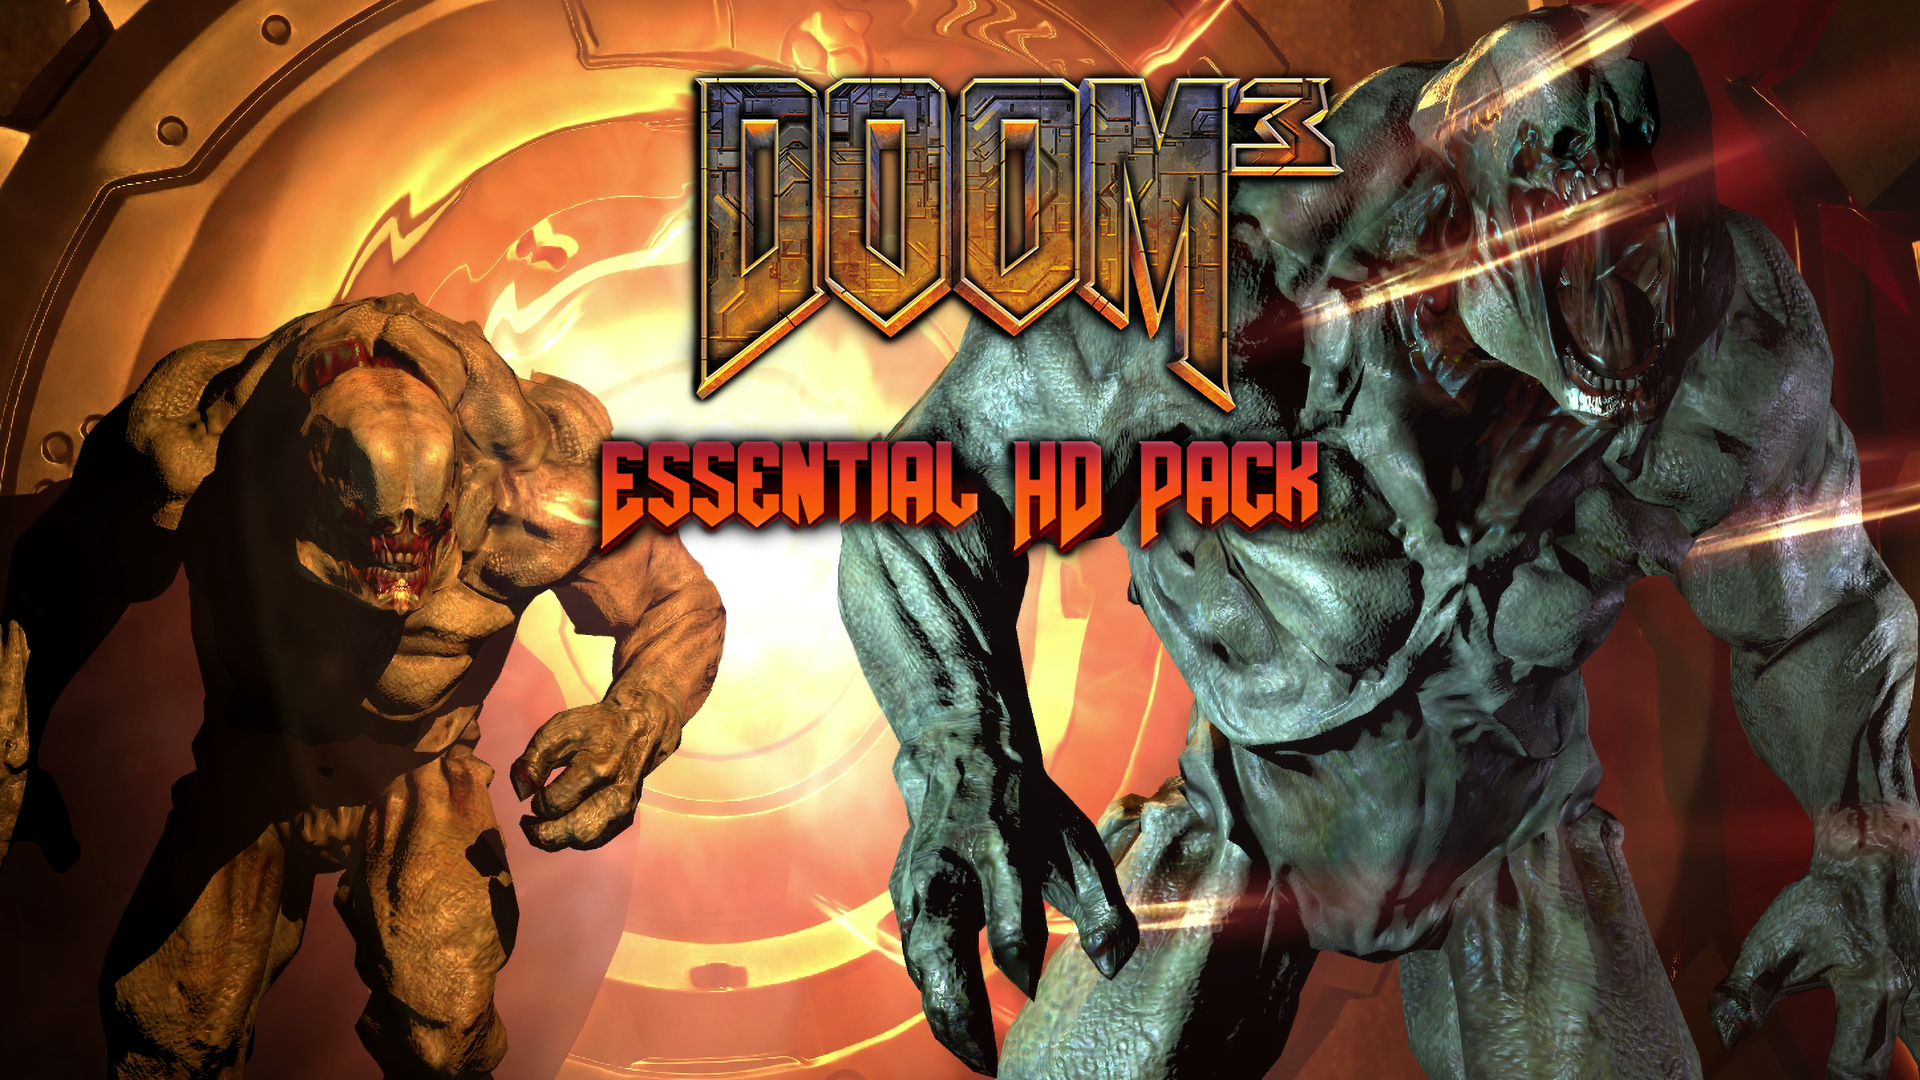 D3HDP - DooM 3 Essential HD Pack Mod - Download